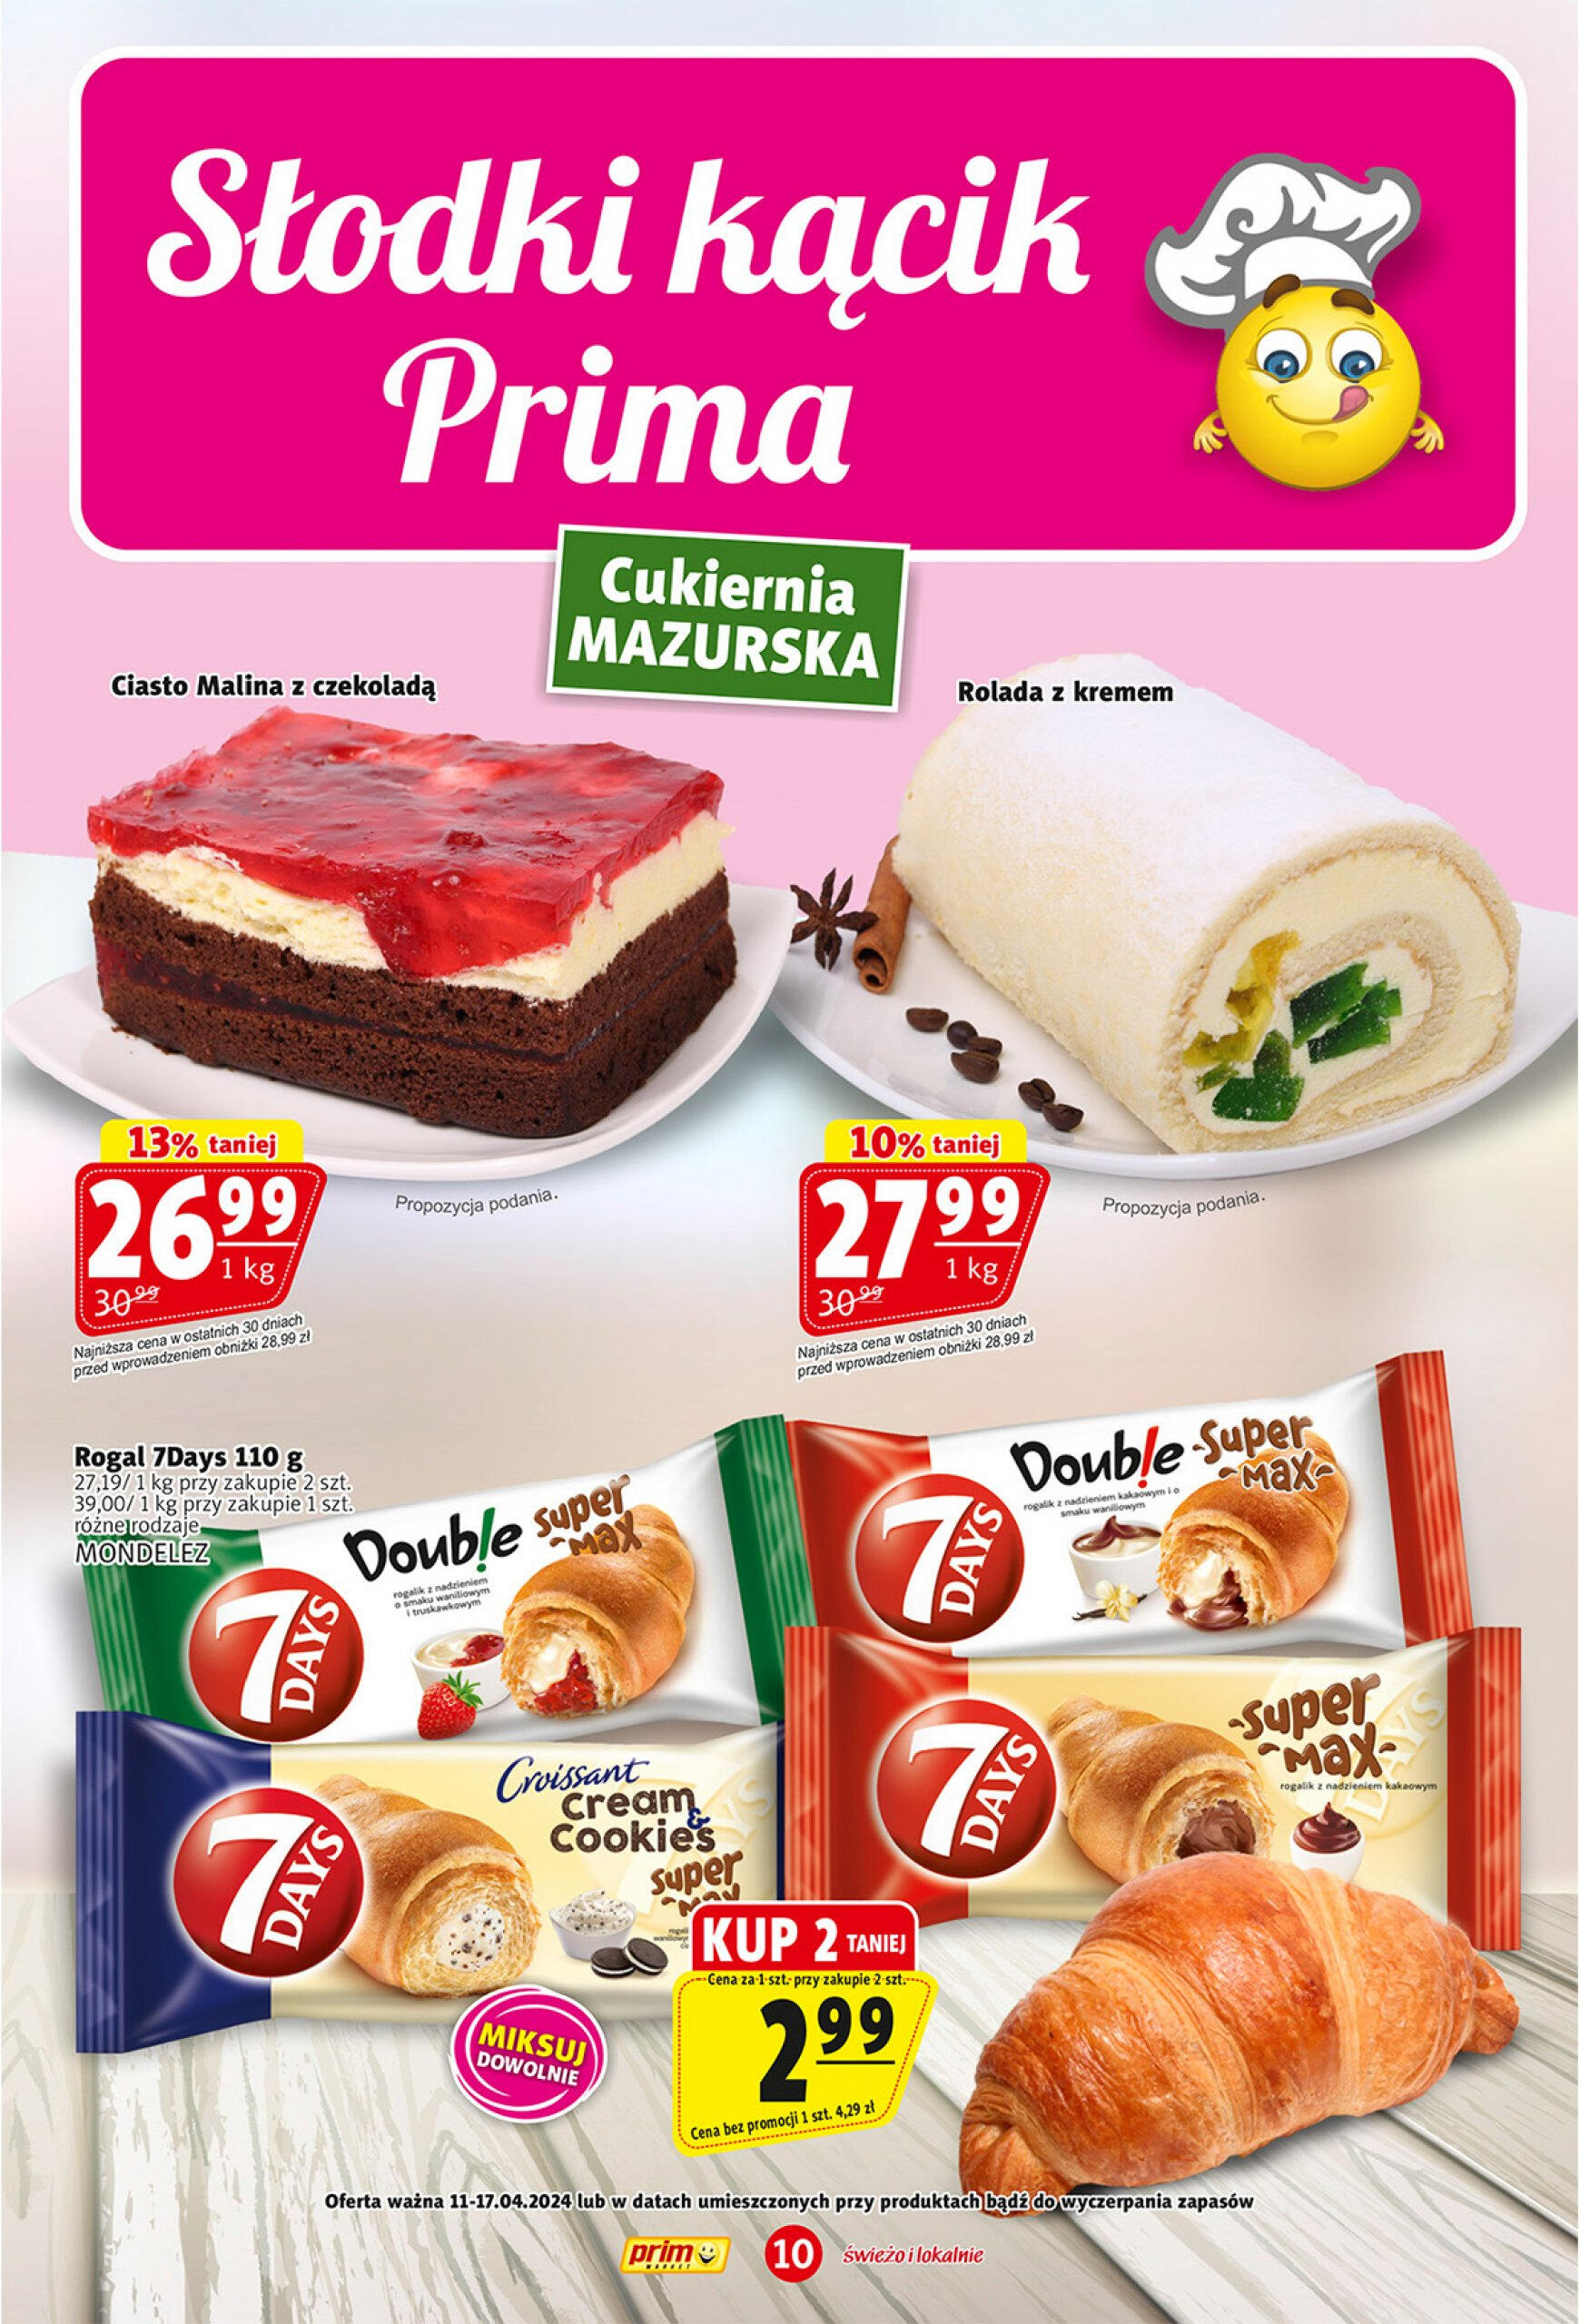 prim-market - Prim Market gazetka aktualna ważna od 11.04. - 17.04. - page: 10